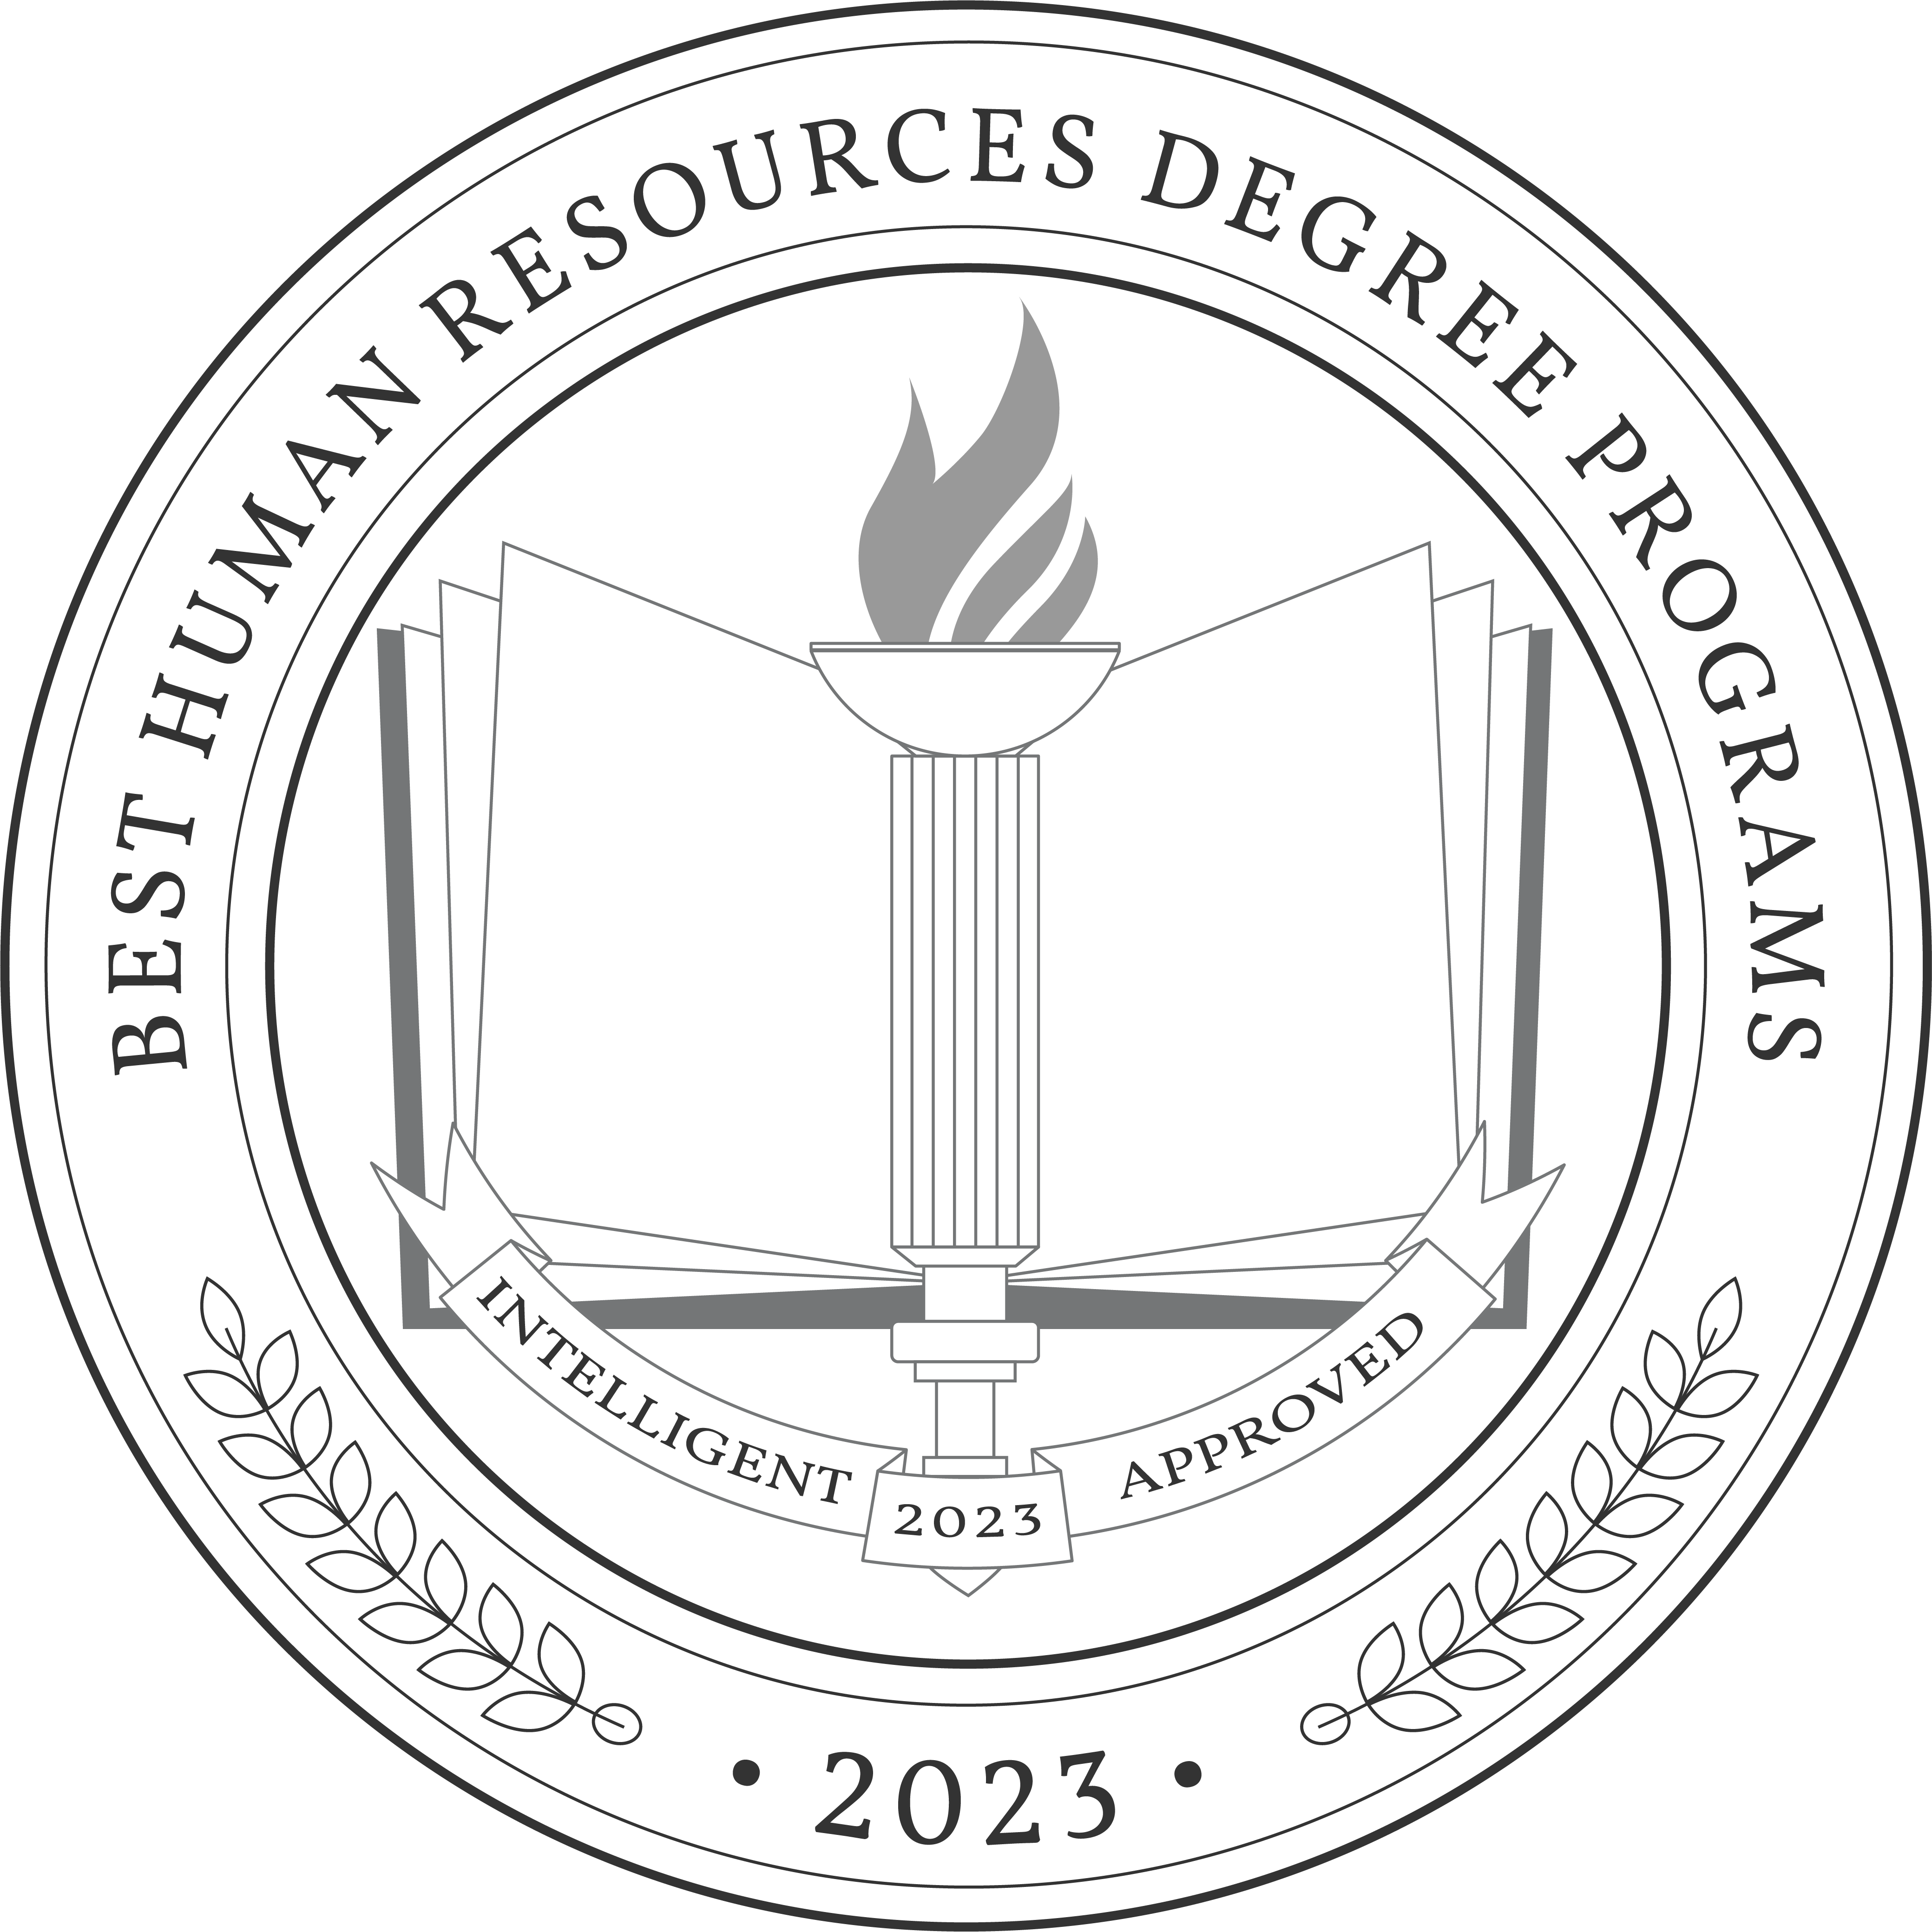 Best Human Resources Degree Programs 2023